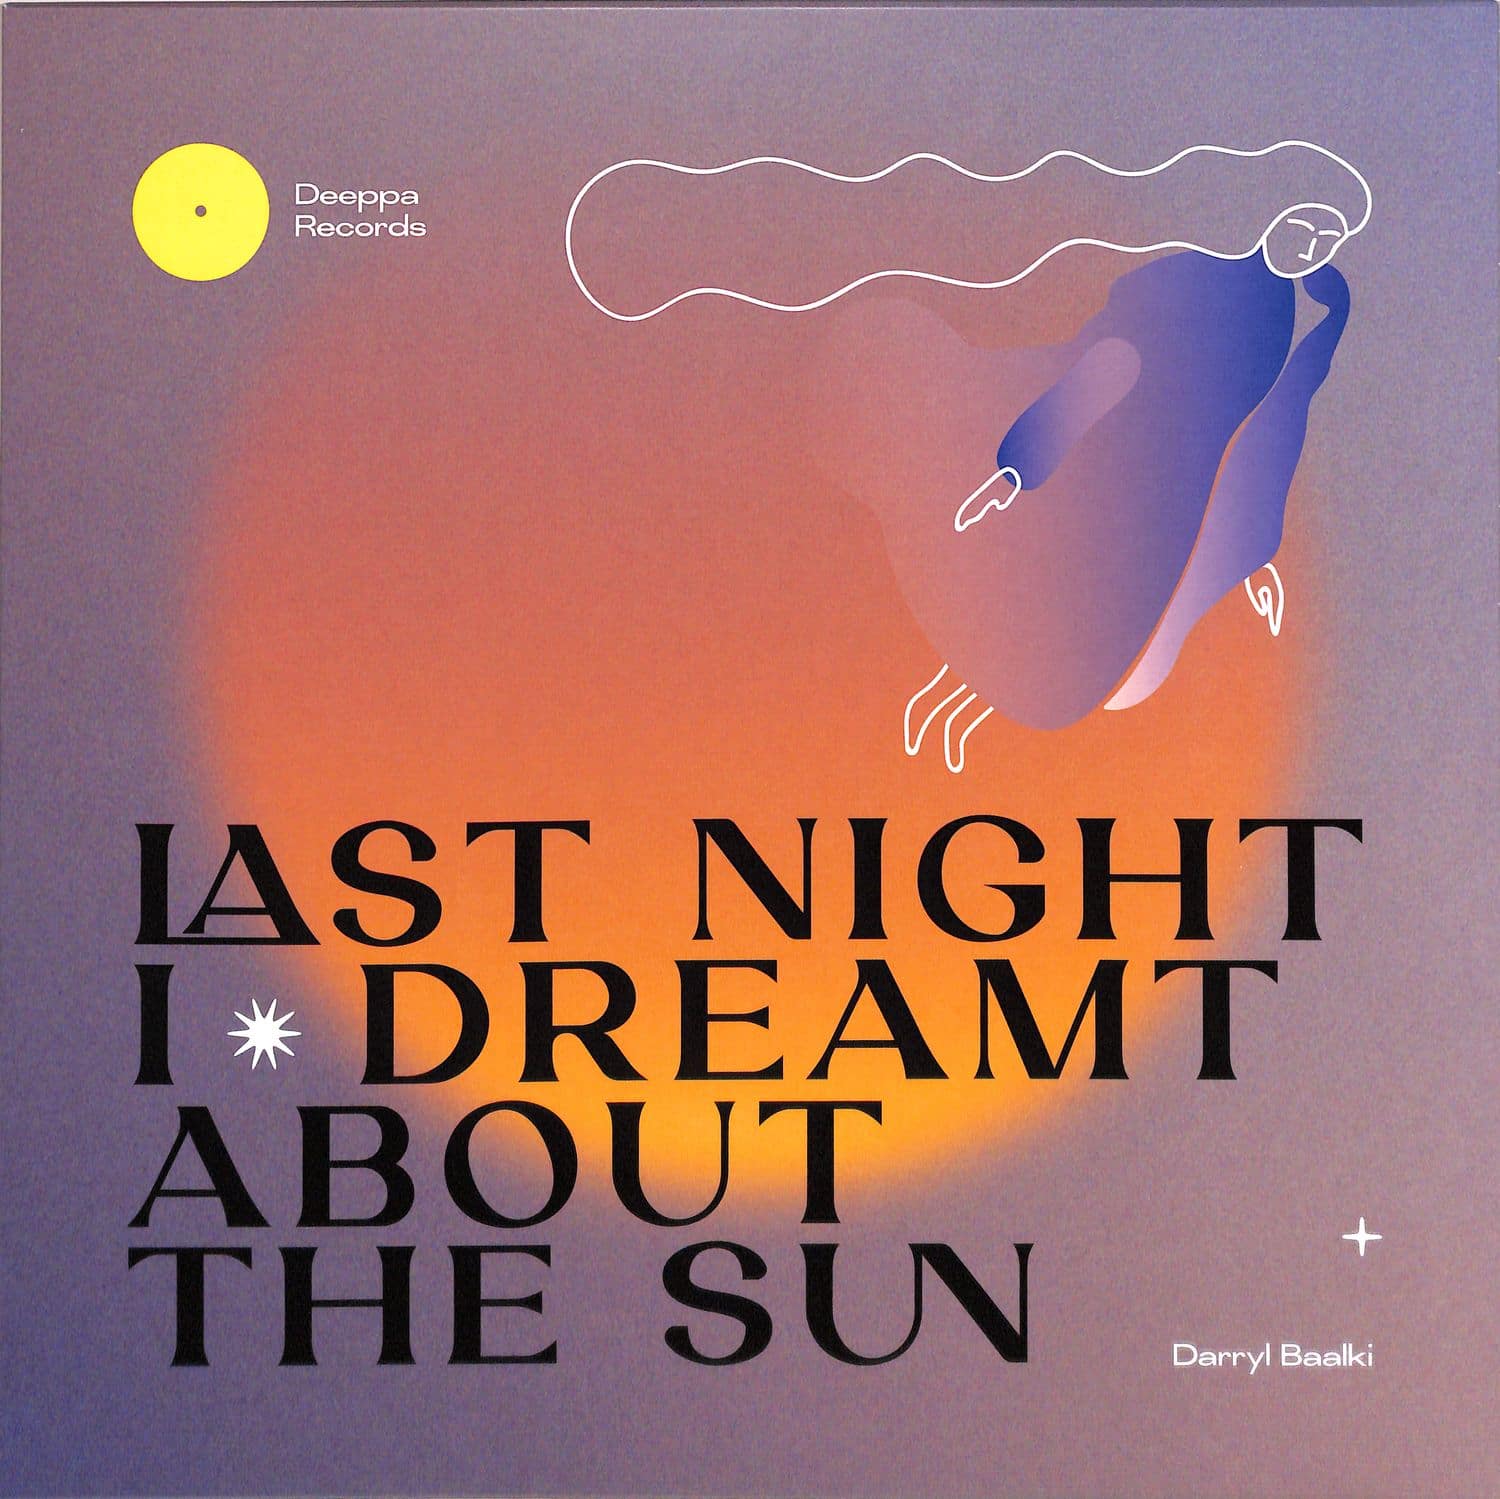 Darryl Baalki - LAST NIGHT I DREAMT ABOUT THE SUN EP